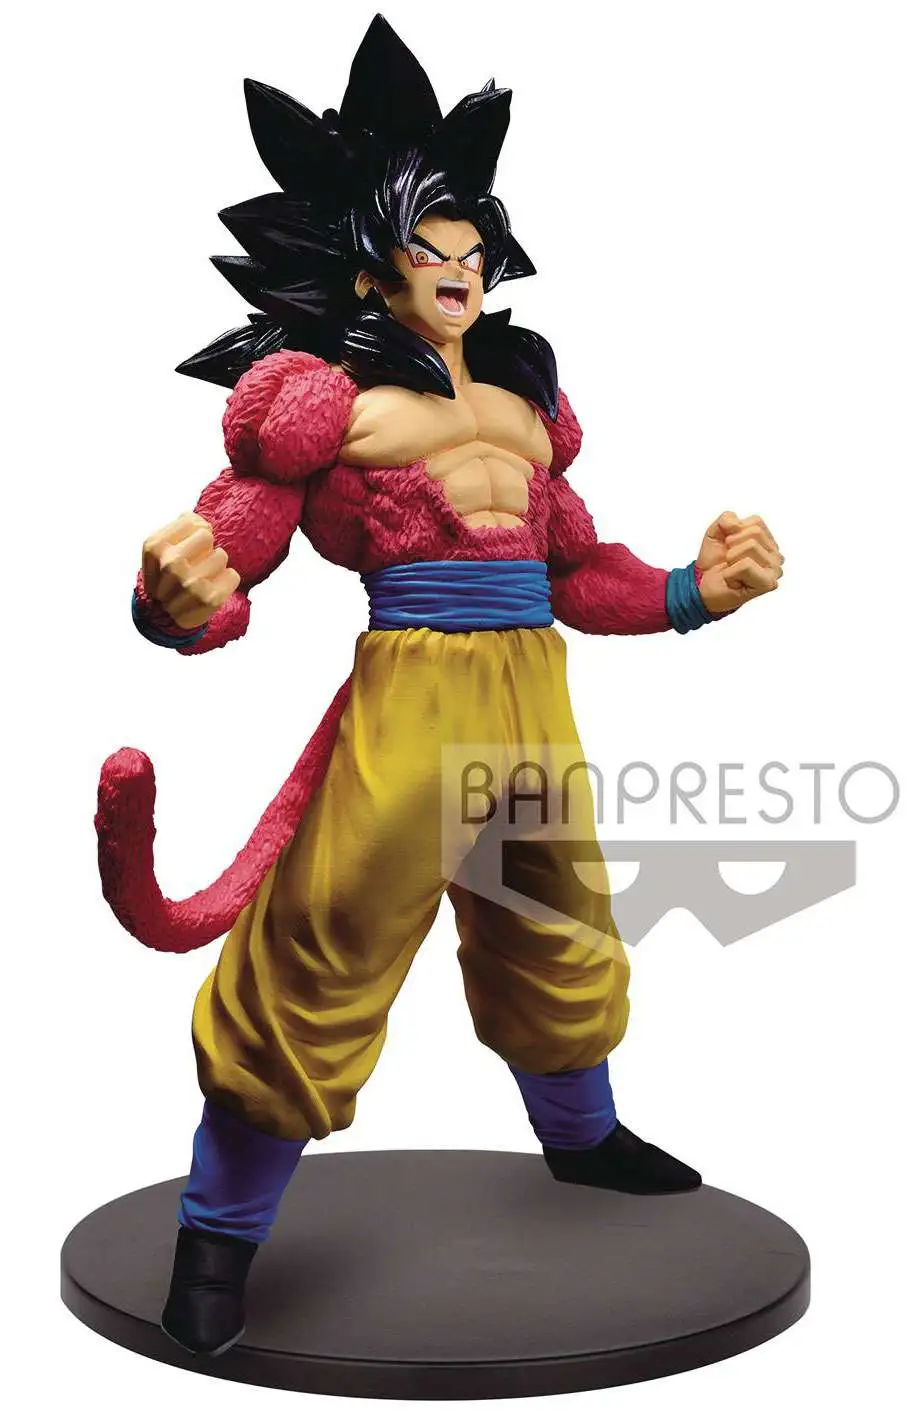 ORIGINAL Banpresto Dragonball Figur Blood of Saiyans Special Son Goku 